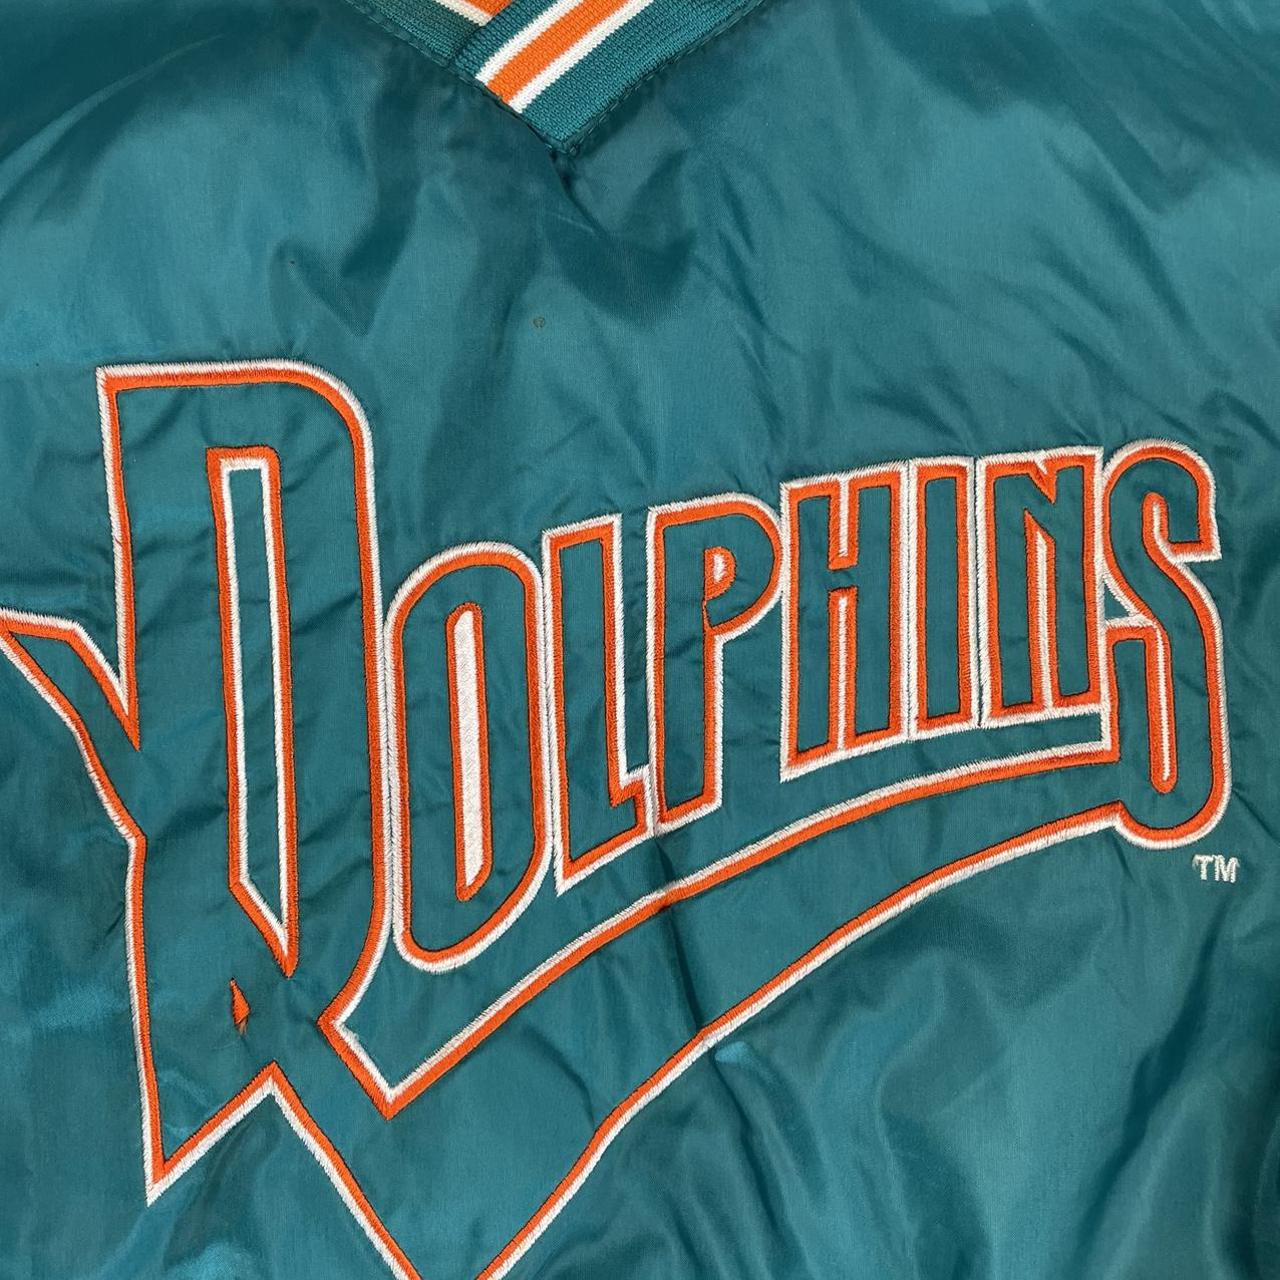 Vintage Miami Dolphins jacket 90s era Fully... - Depop